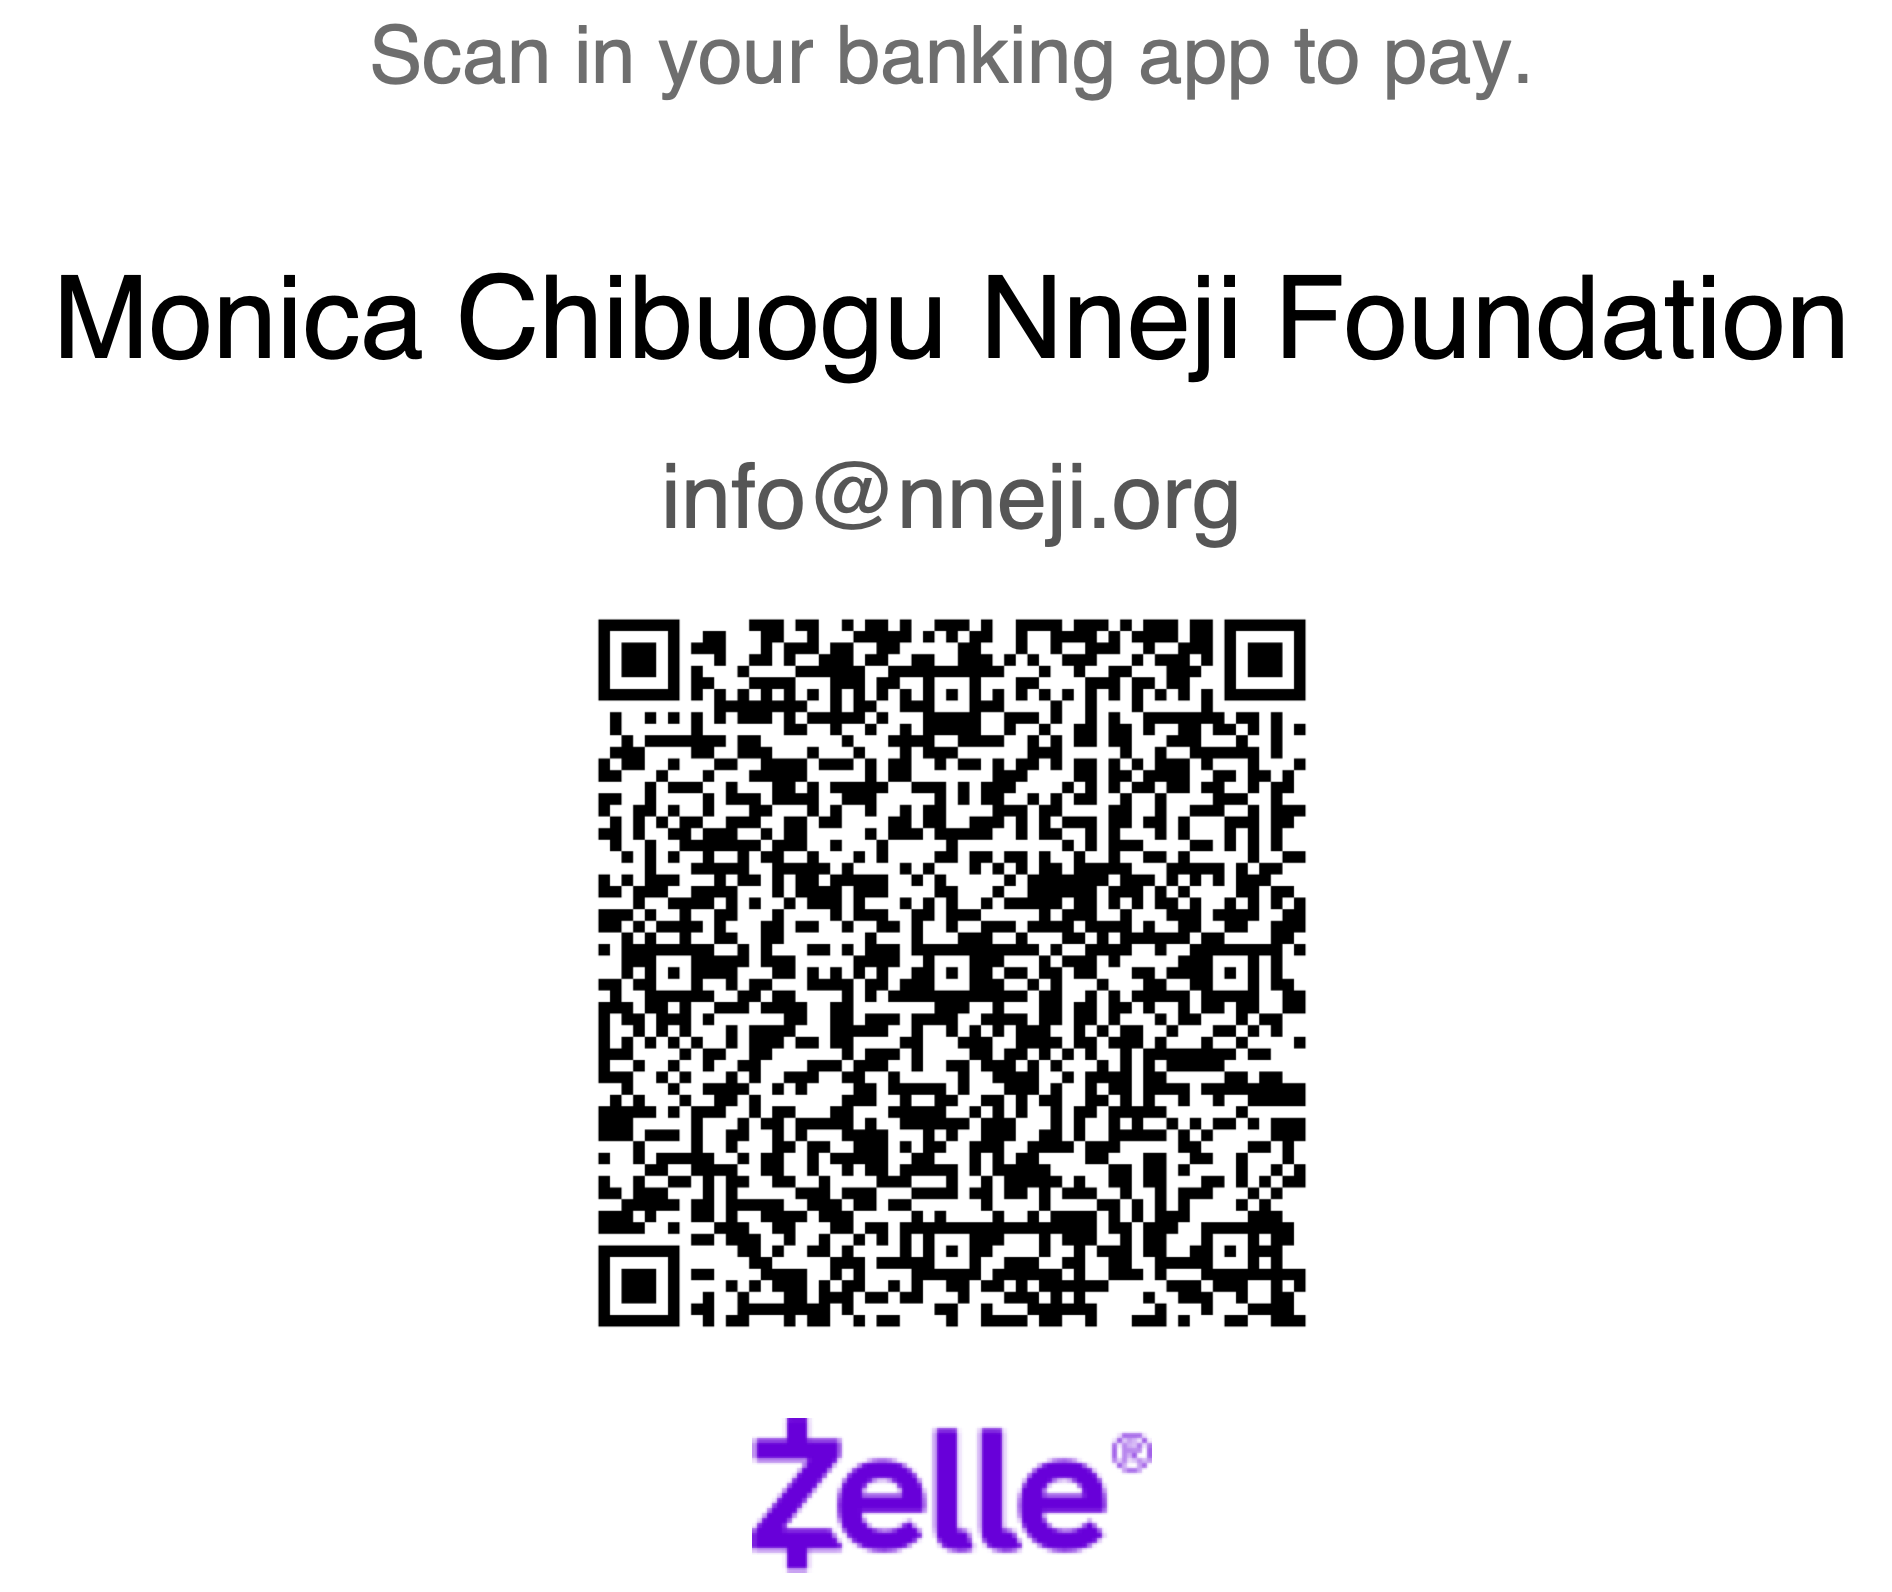 Donate via Zelle to the Monica Chibuogu Nneji Foundation at info@nneji.org